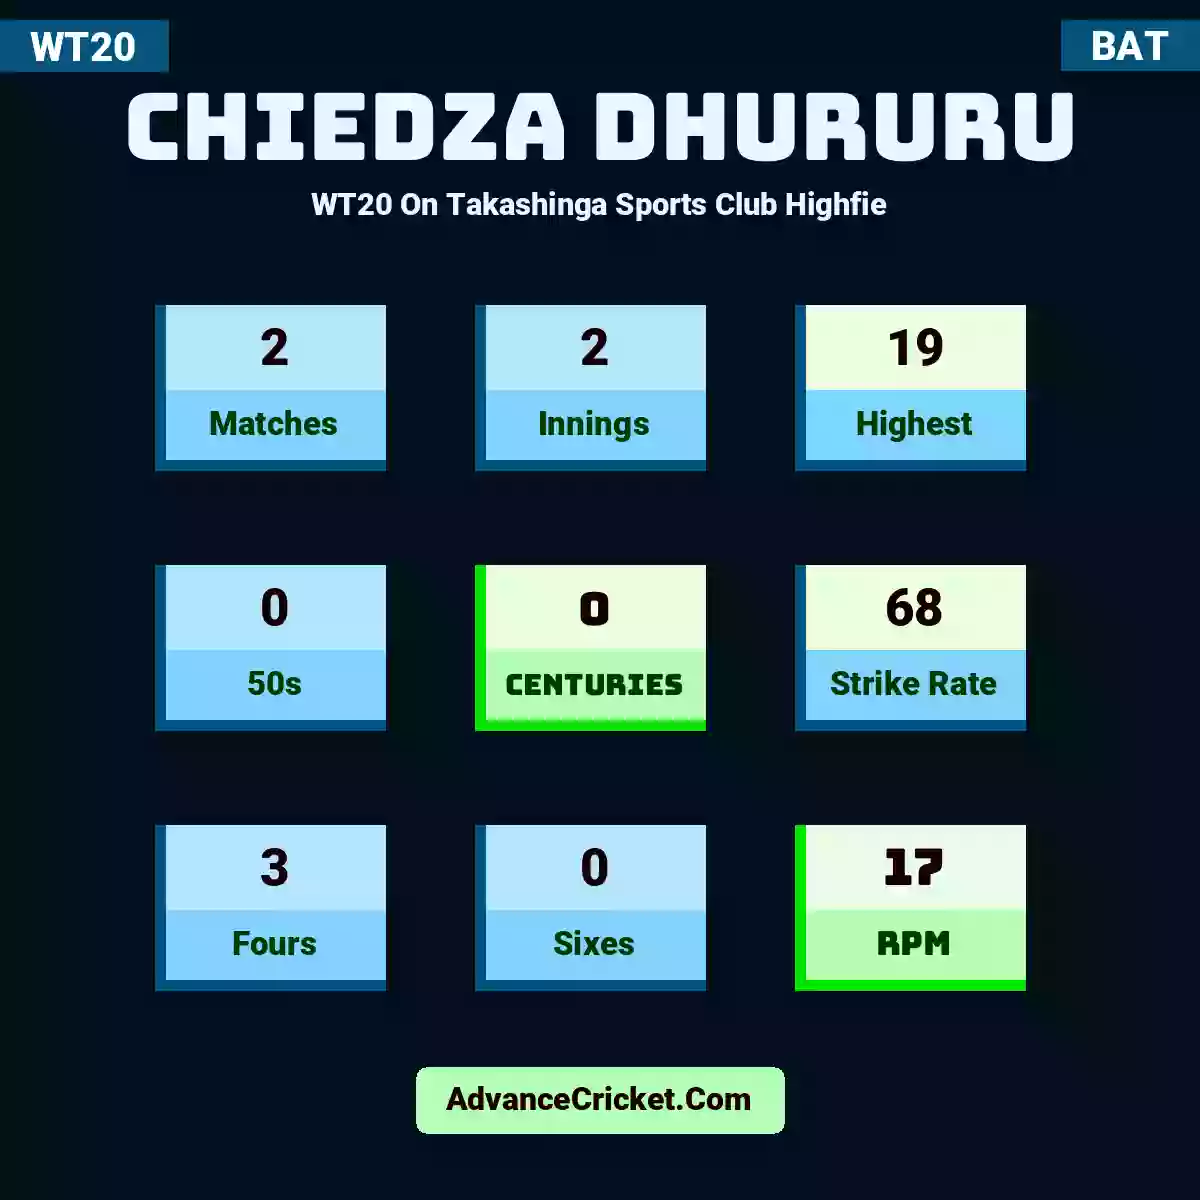 Chiedza Dhururu WT20  On Takashinga Sports Club Highfie, Chiedza Dhururu played 2 matches, scored 19 runs as highest, 0 half-centuries, and 0 centuries, with a strike rate of 68. C.Dhururu hit 3 fours and 0 sixes, with an RPM of 17.